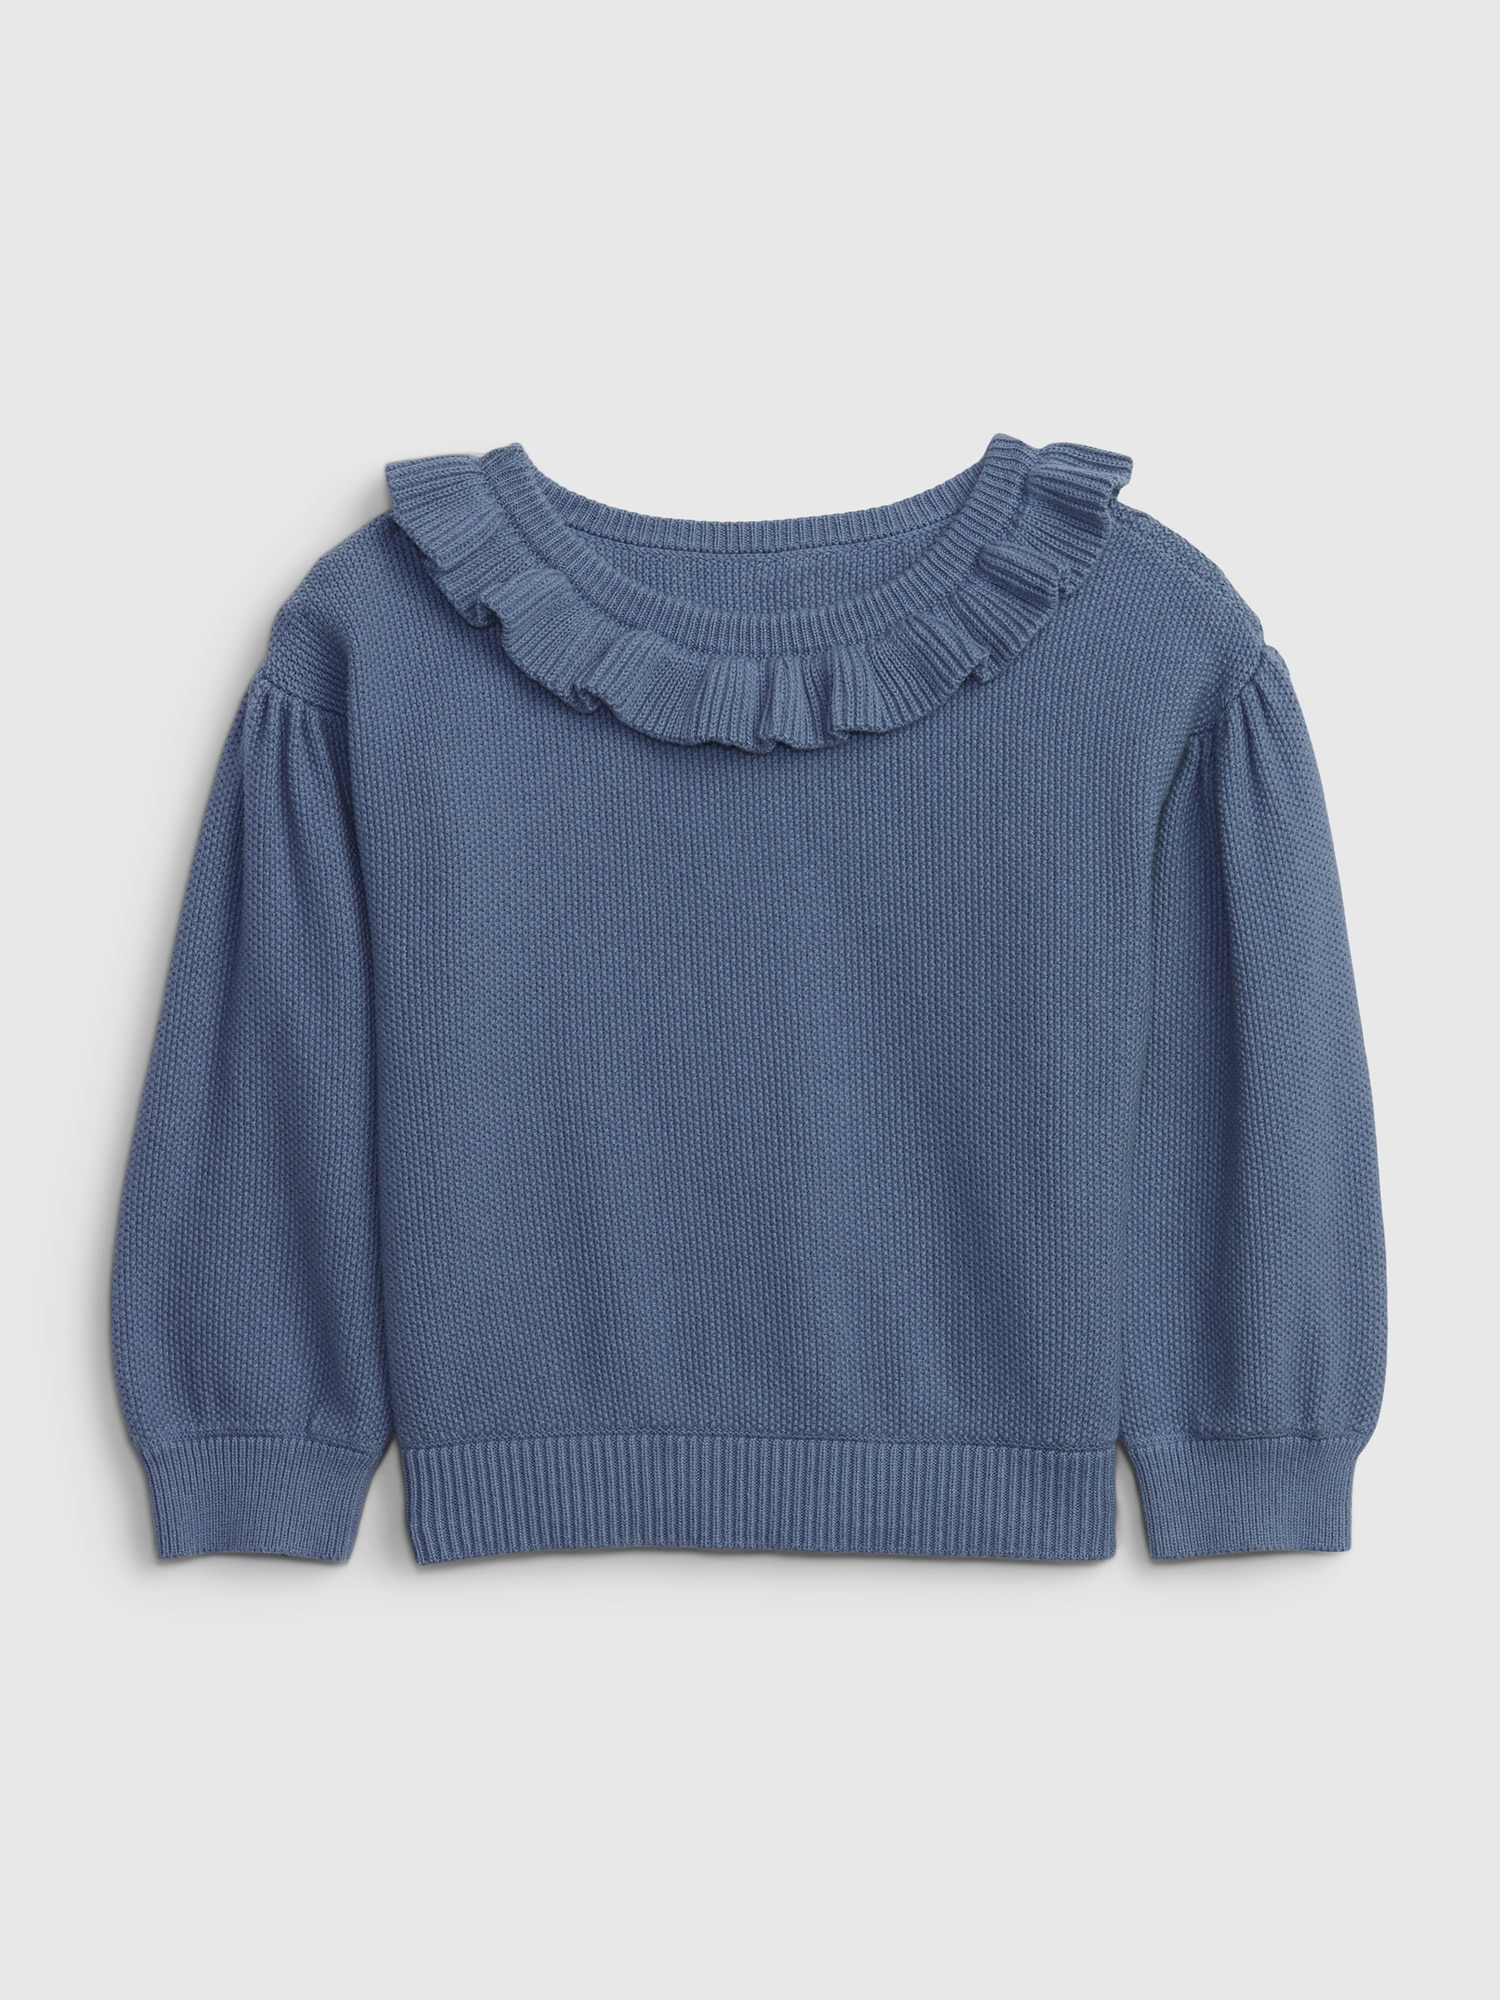 Gap Babies' Toddler Ruffle Sweater In Bainbridge Blue